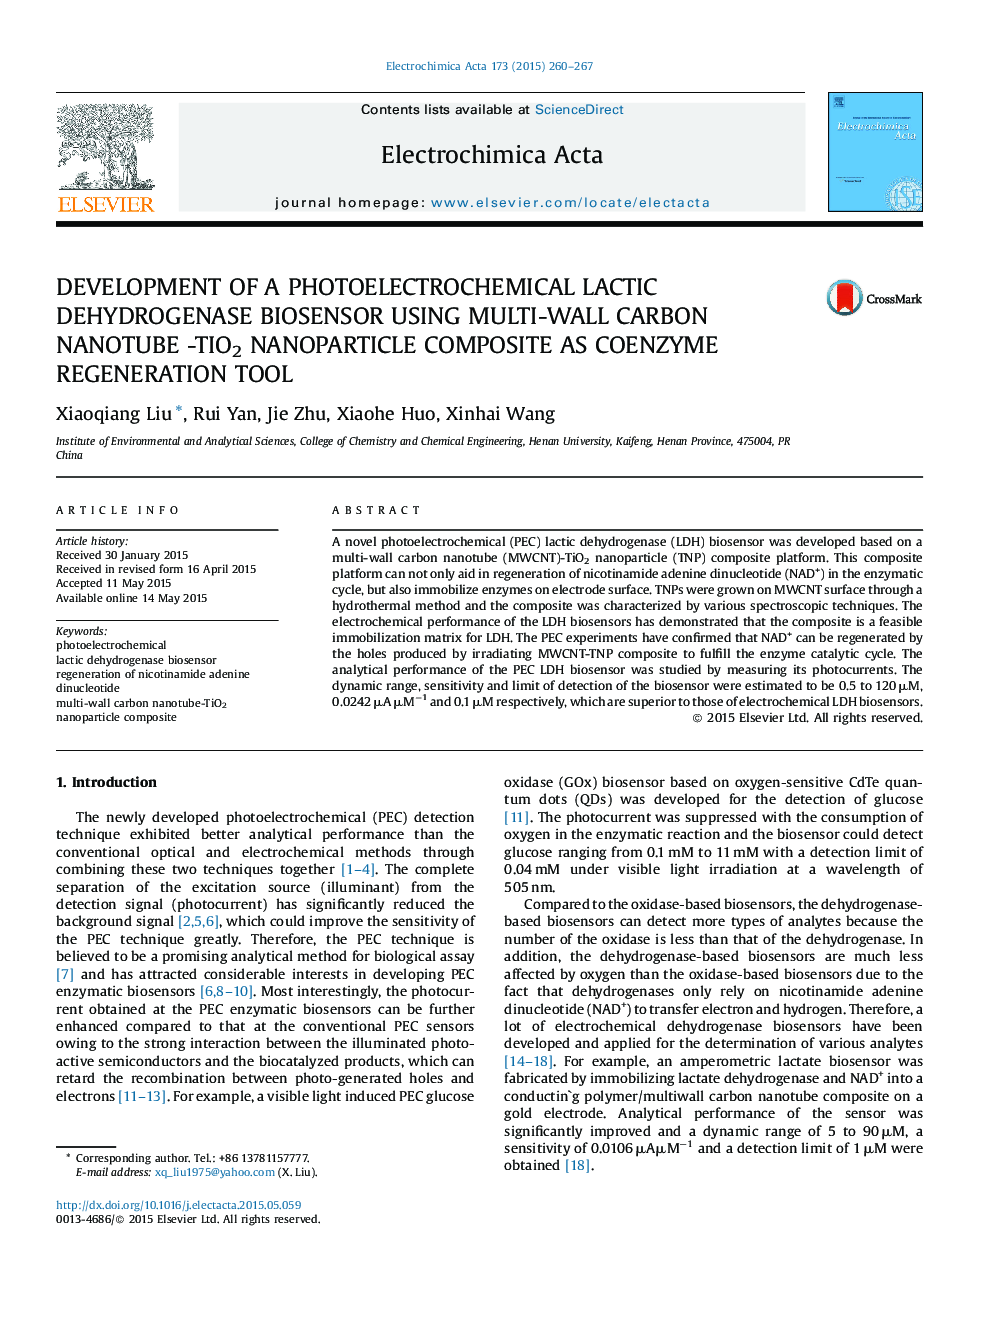 DEVELOPMENT OF A PHOTOELECTROCHEMICAL LACTIC DEHYDROGENASE BIOSENSOR USING MULTI-WALL CARBON NANOTUBE -TIO2 NANOPARTICLE COMPOSITE AS COENZYME REGENERATION TOOL